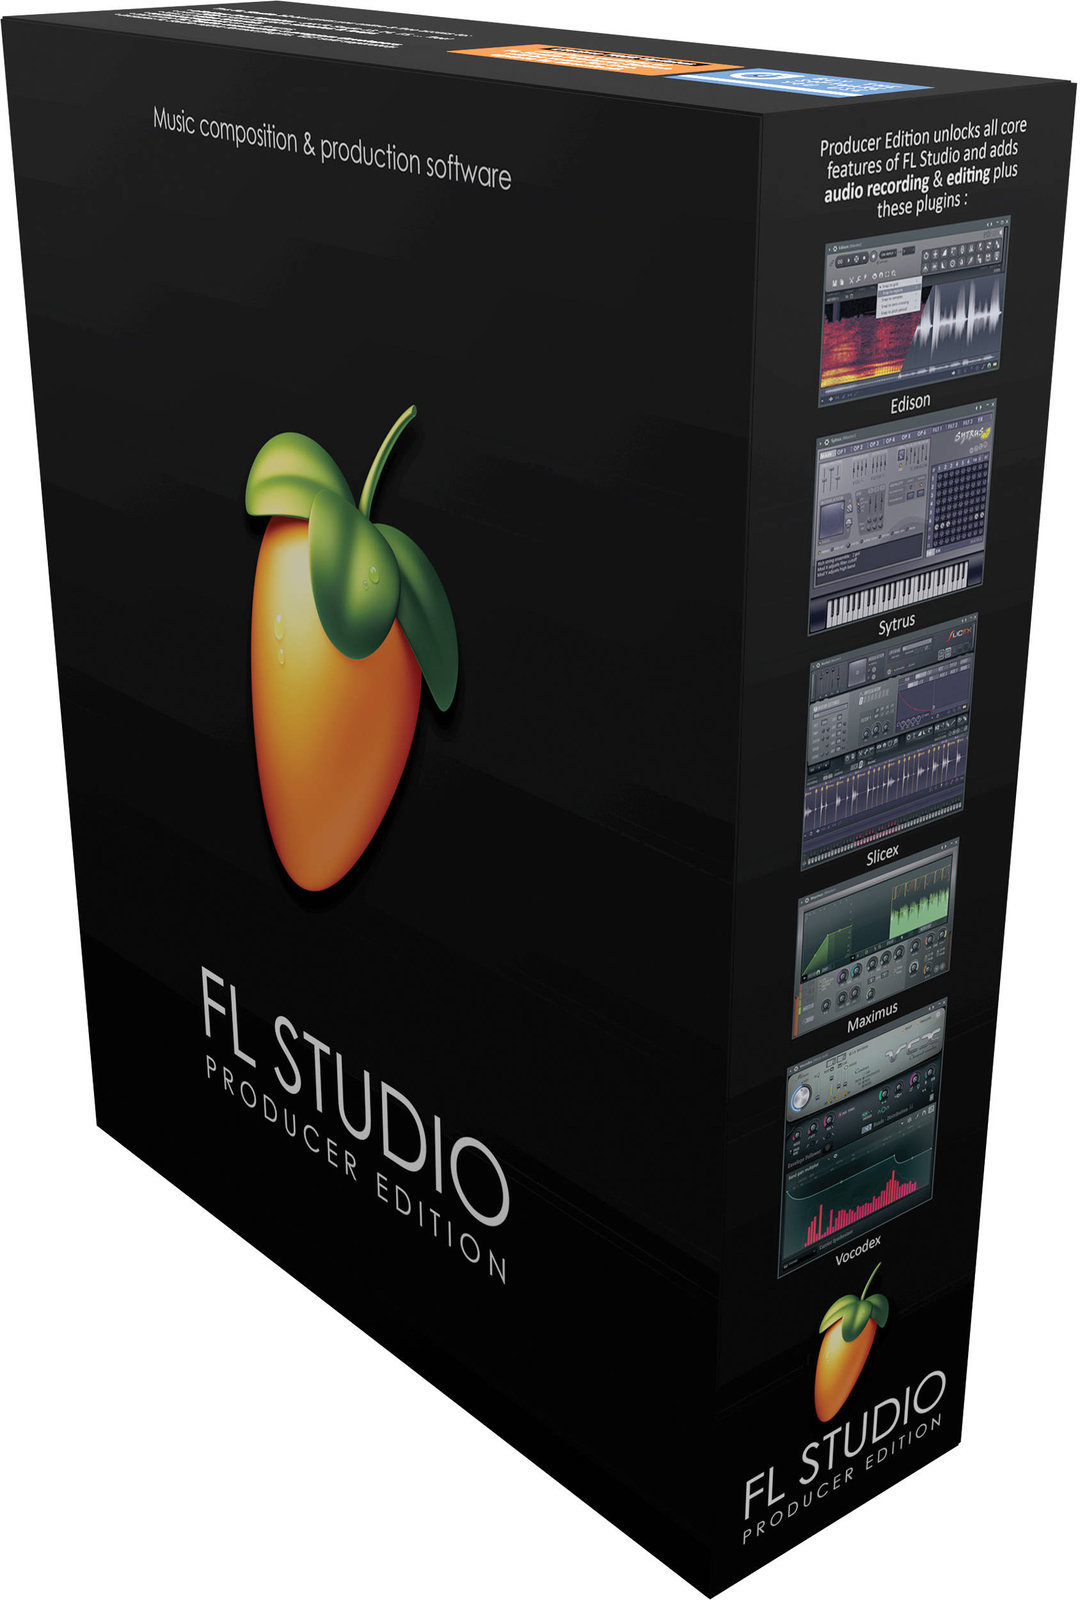 DAW-optagelsessoftware Image Line FL Studio 12 Producer Edition